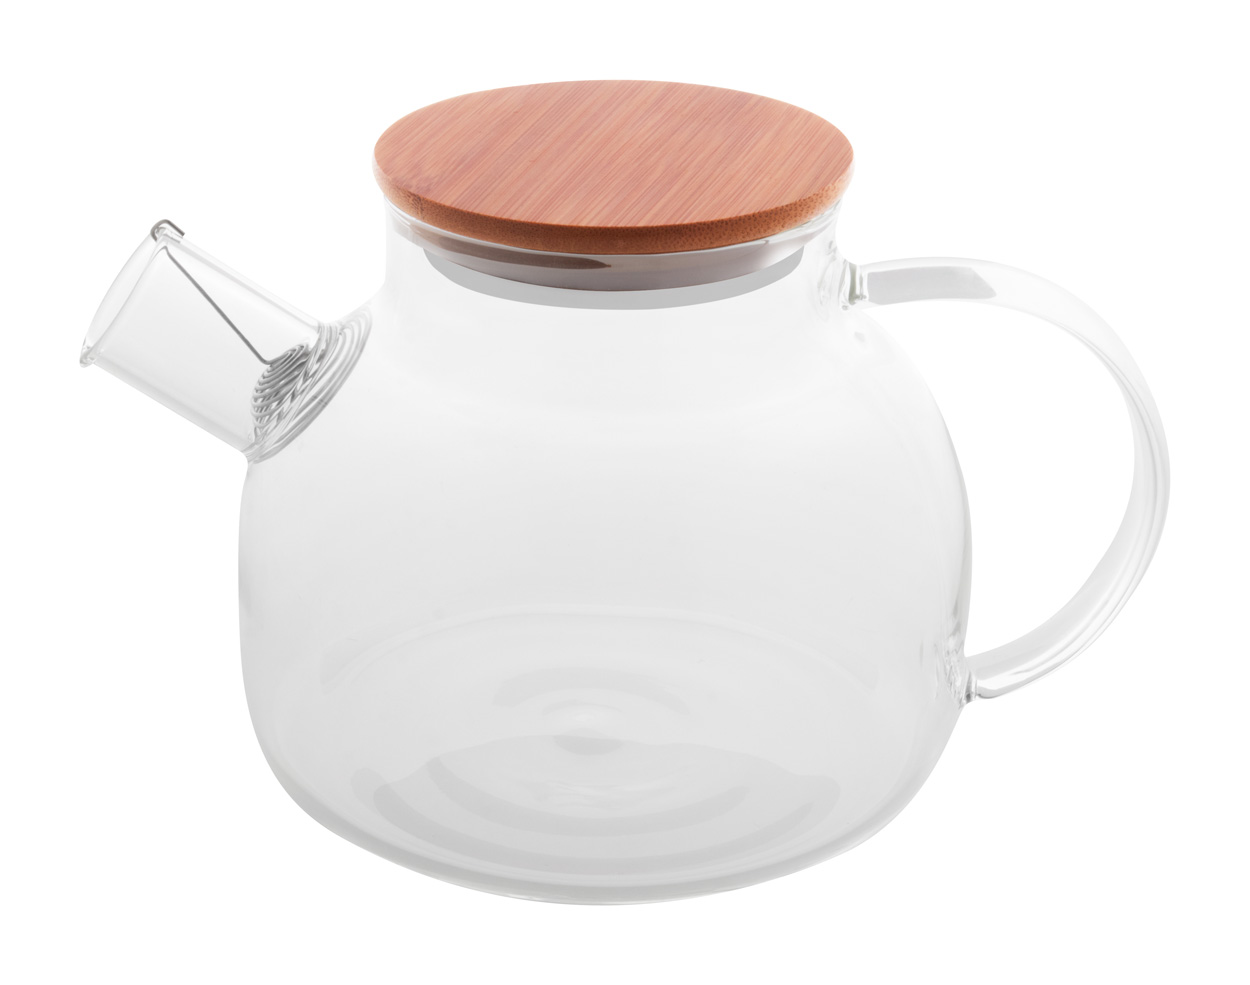 Tenda's glass teapot - Transparente